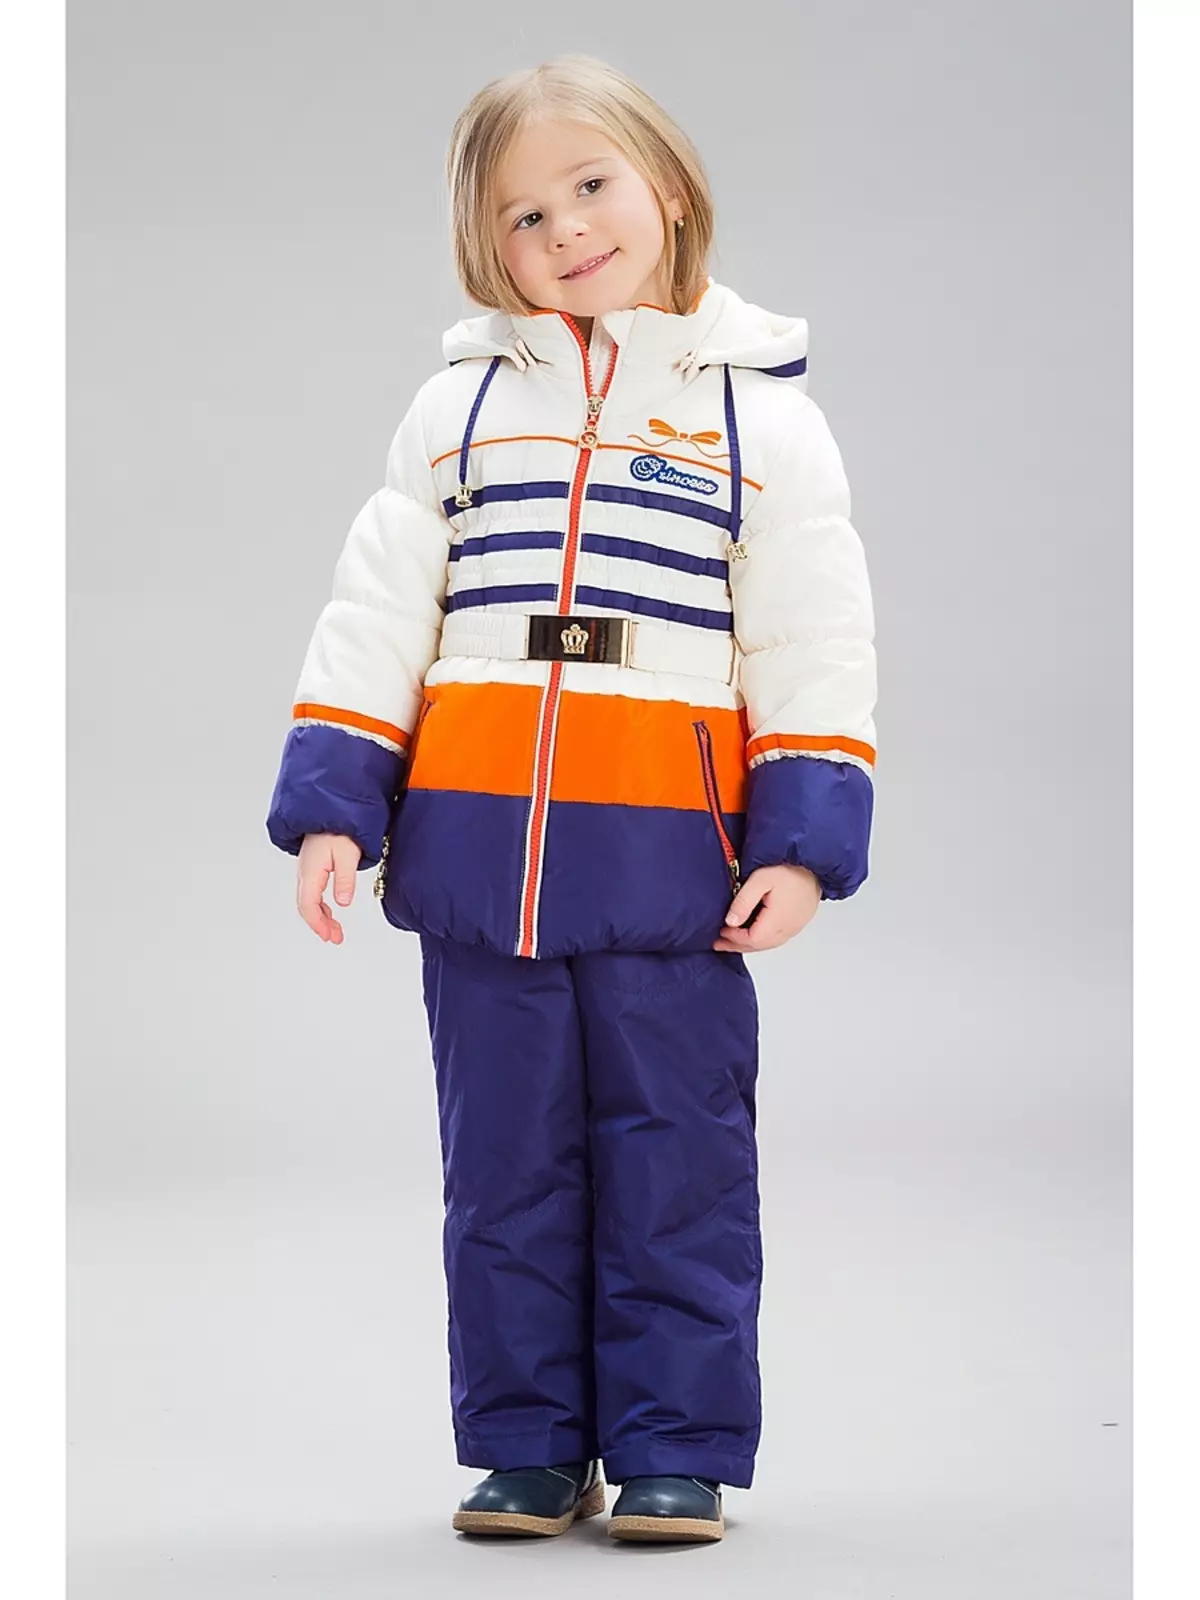 Bilemi (38 장의 사진) : 어린이 의류, 겨울 키트 및 바지, 레인 코트 및 재킷, 브랜드 리뷰 3802_6